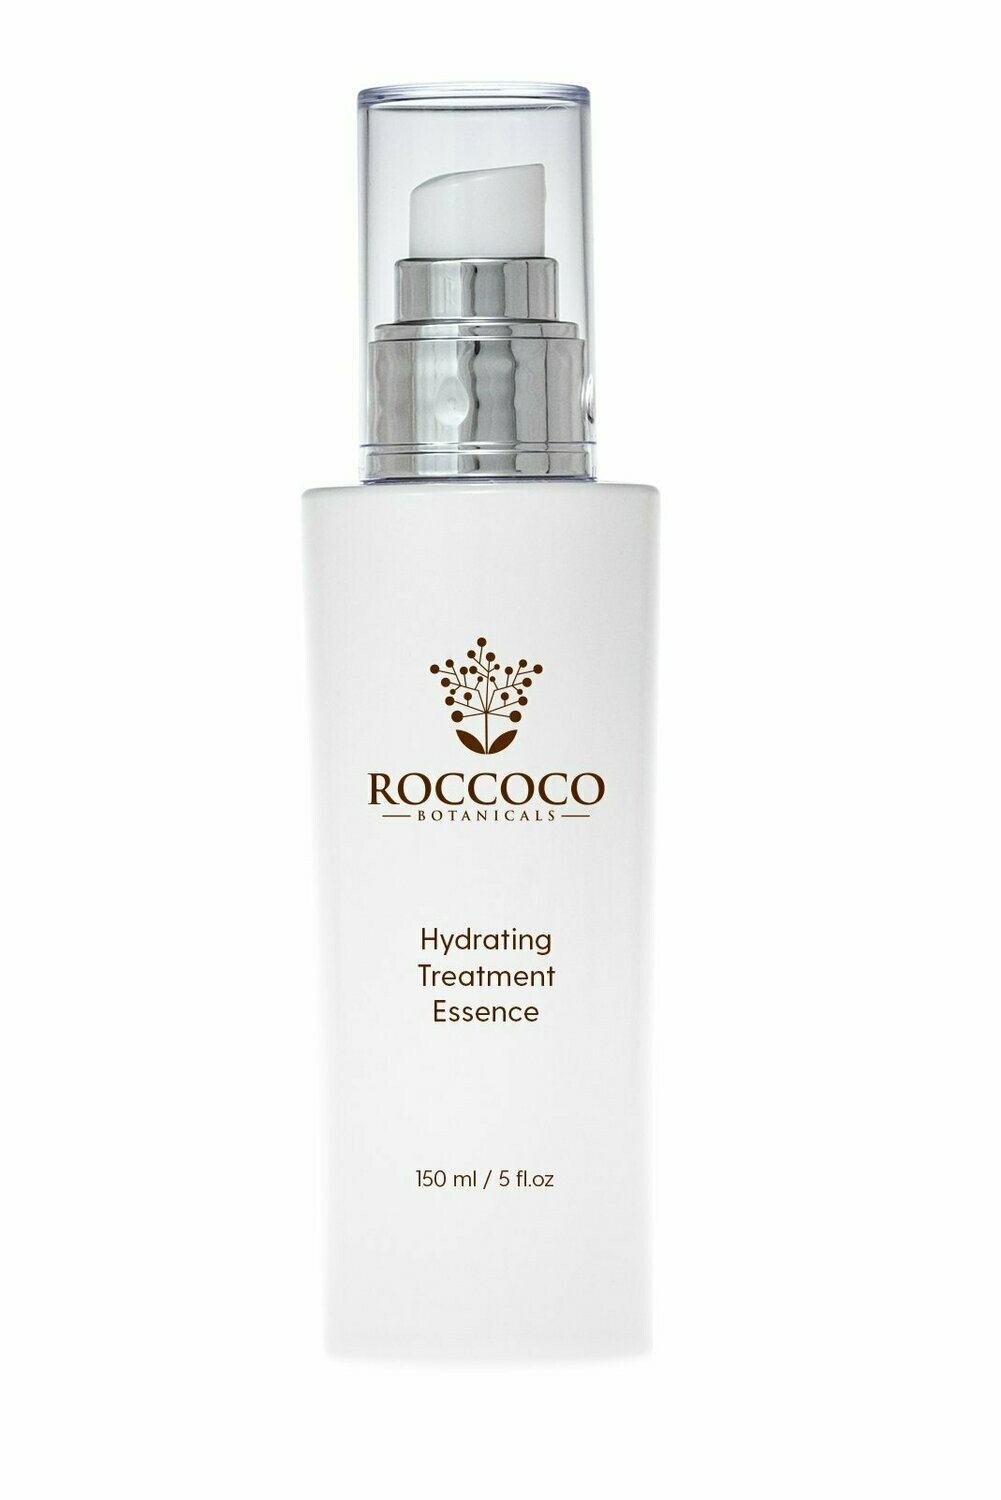 Roccoco Botanicals Hydrating Treatment Essence 6.7oz